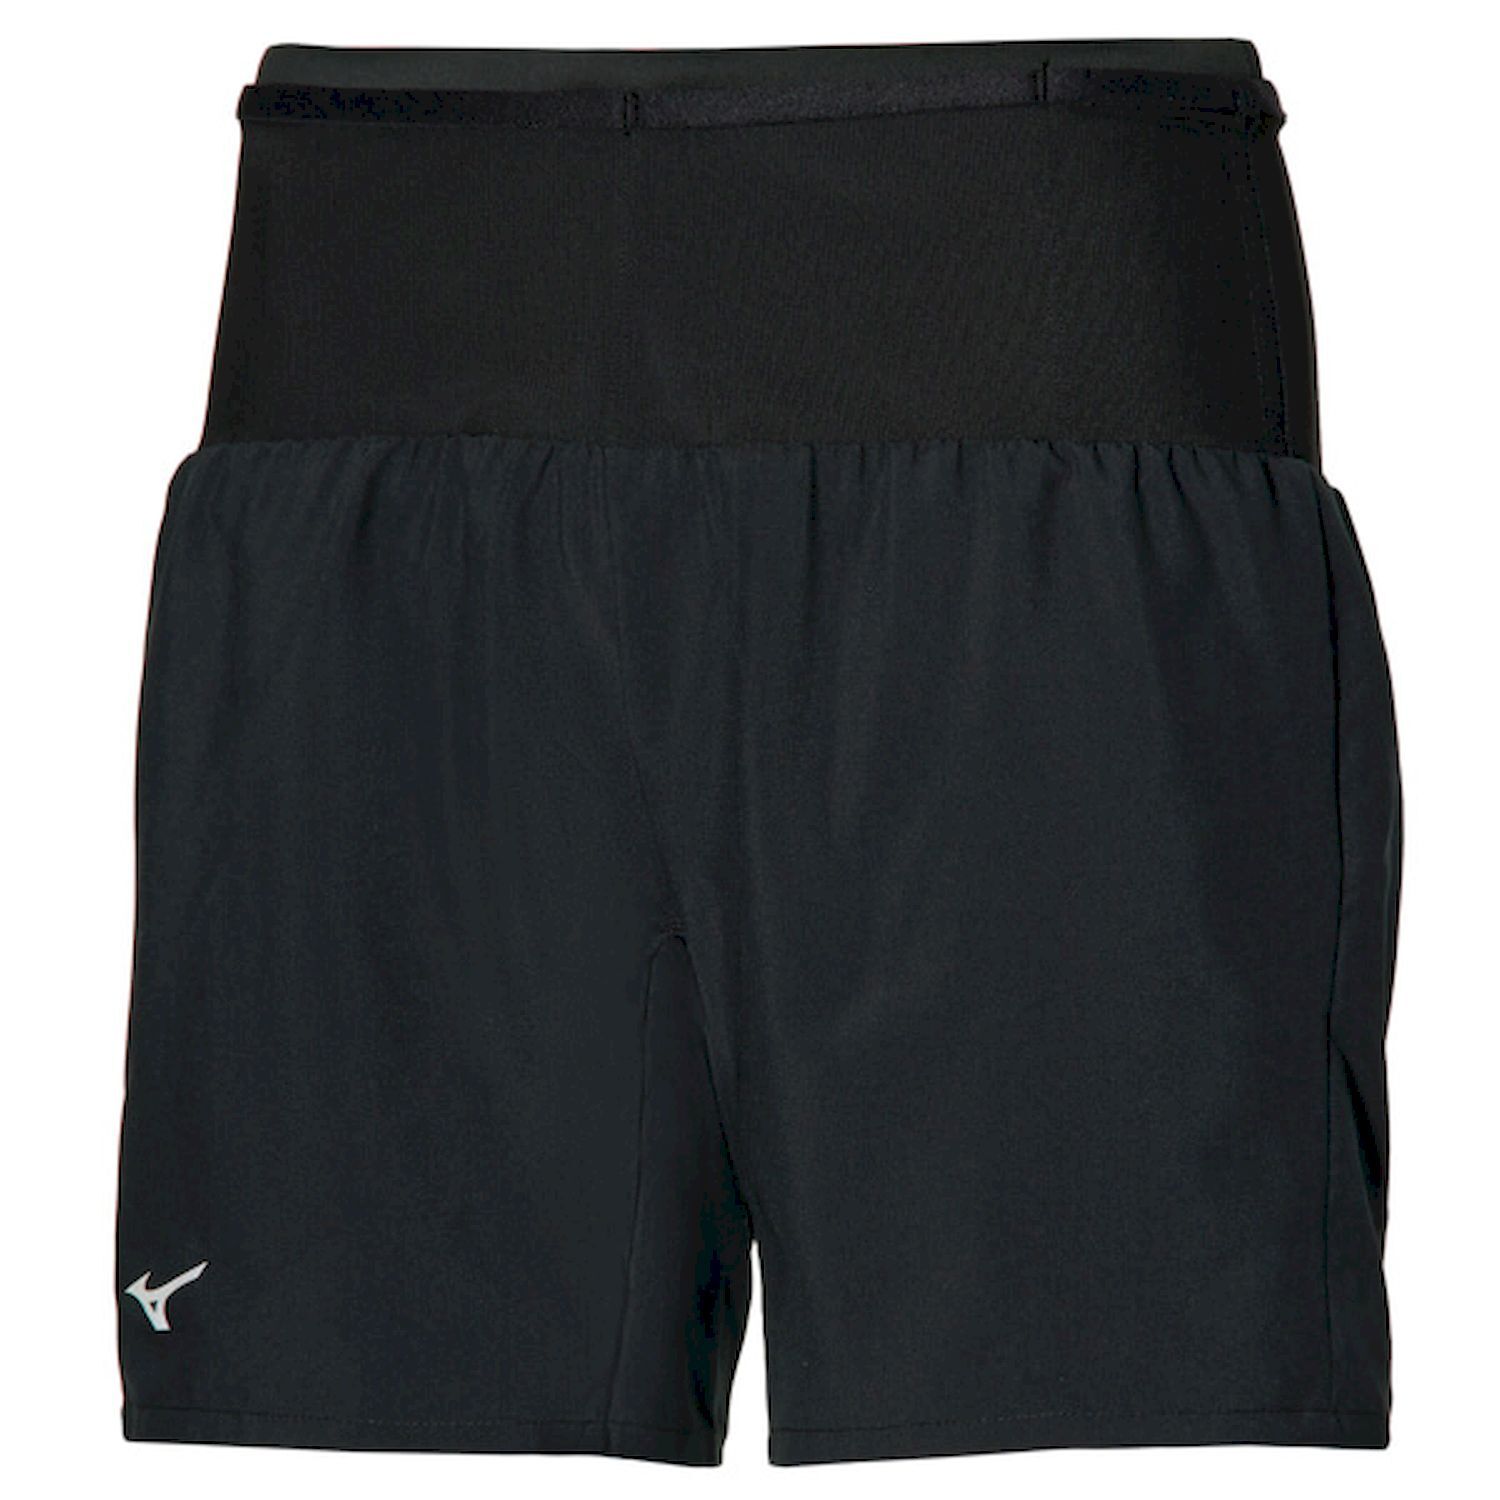 Mizuno Multi Pocket Short - Running shorts - Men's